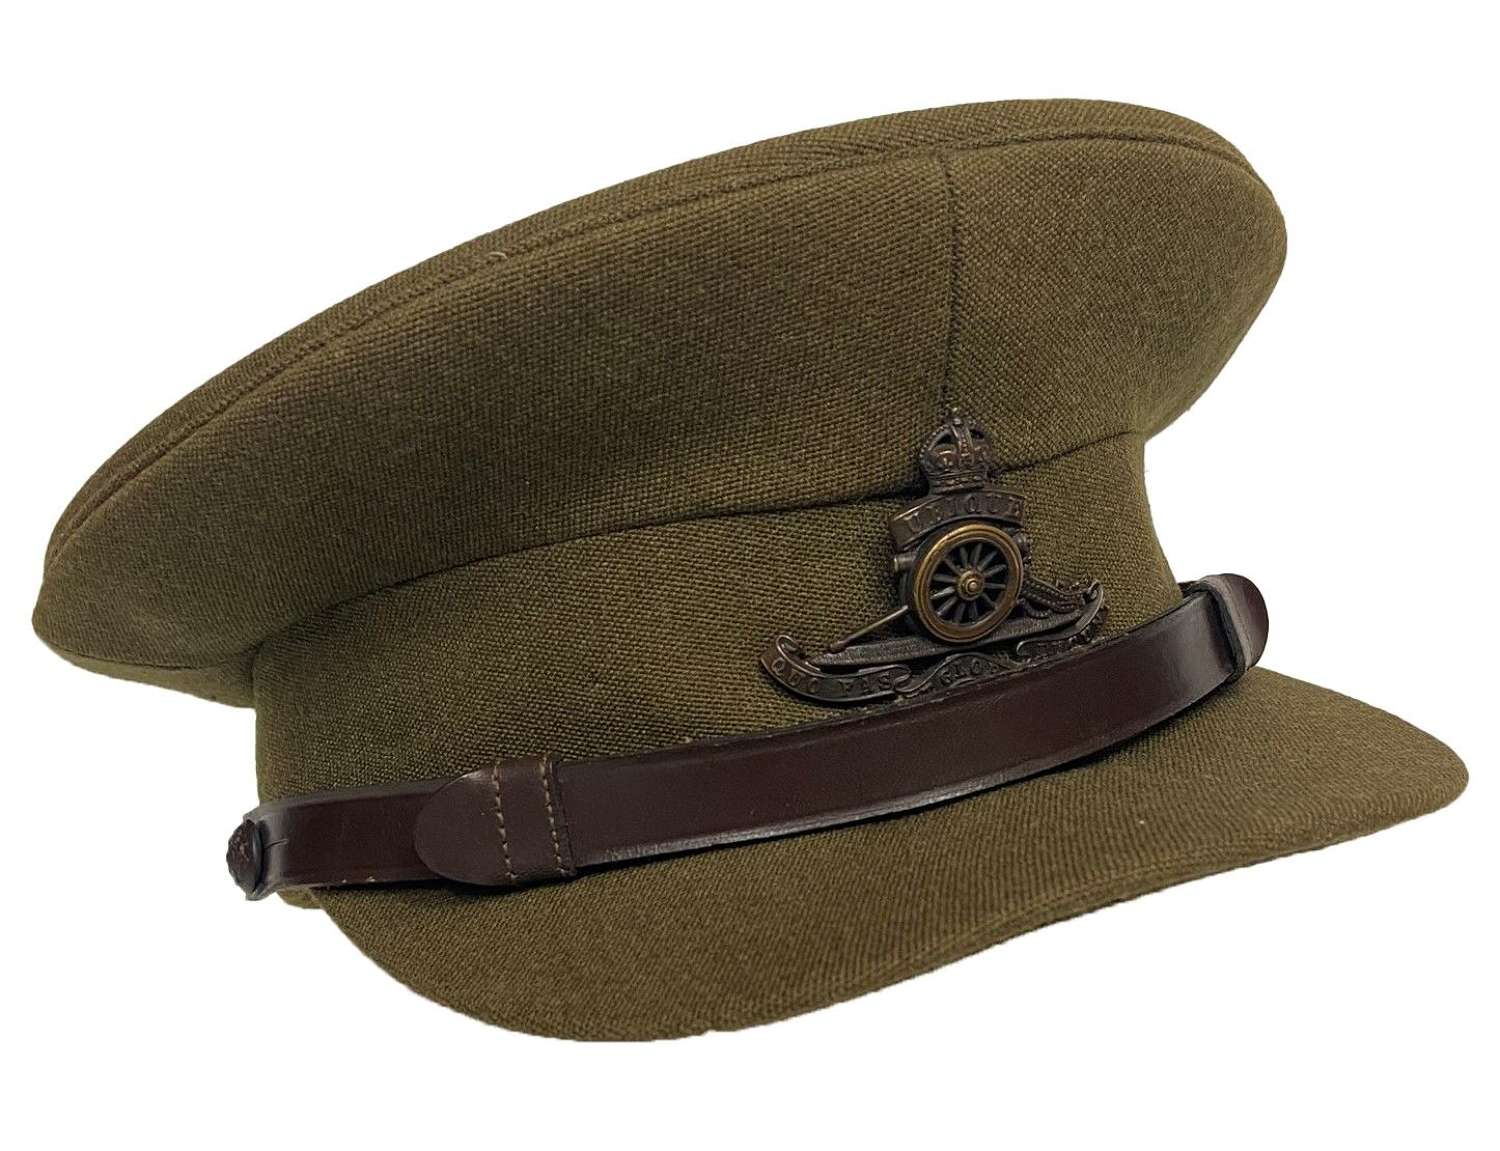 Original WW2 British Army Officers Peaked Cap - Royal Artillery